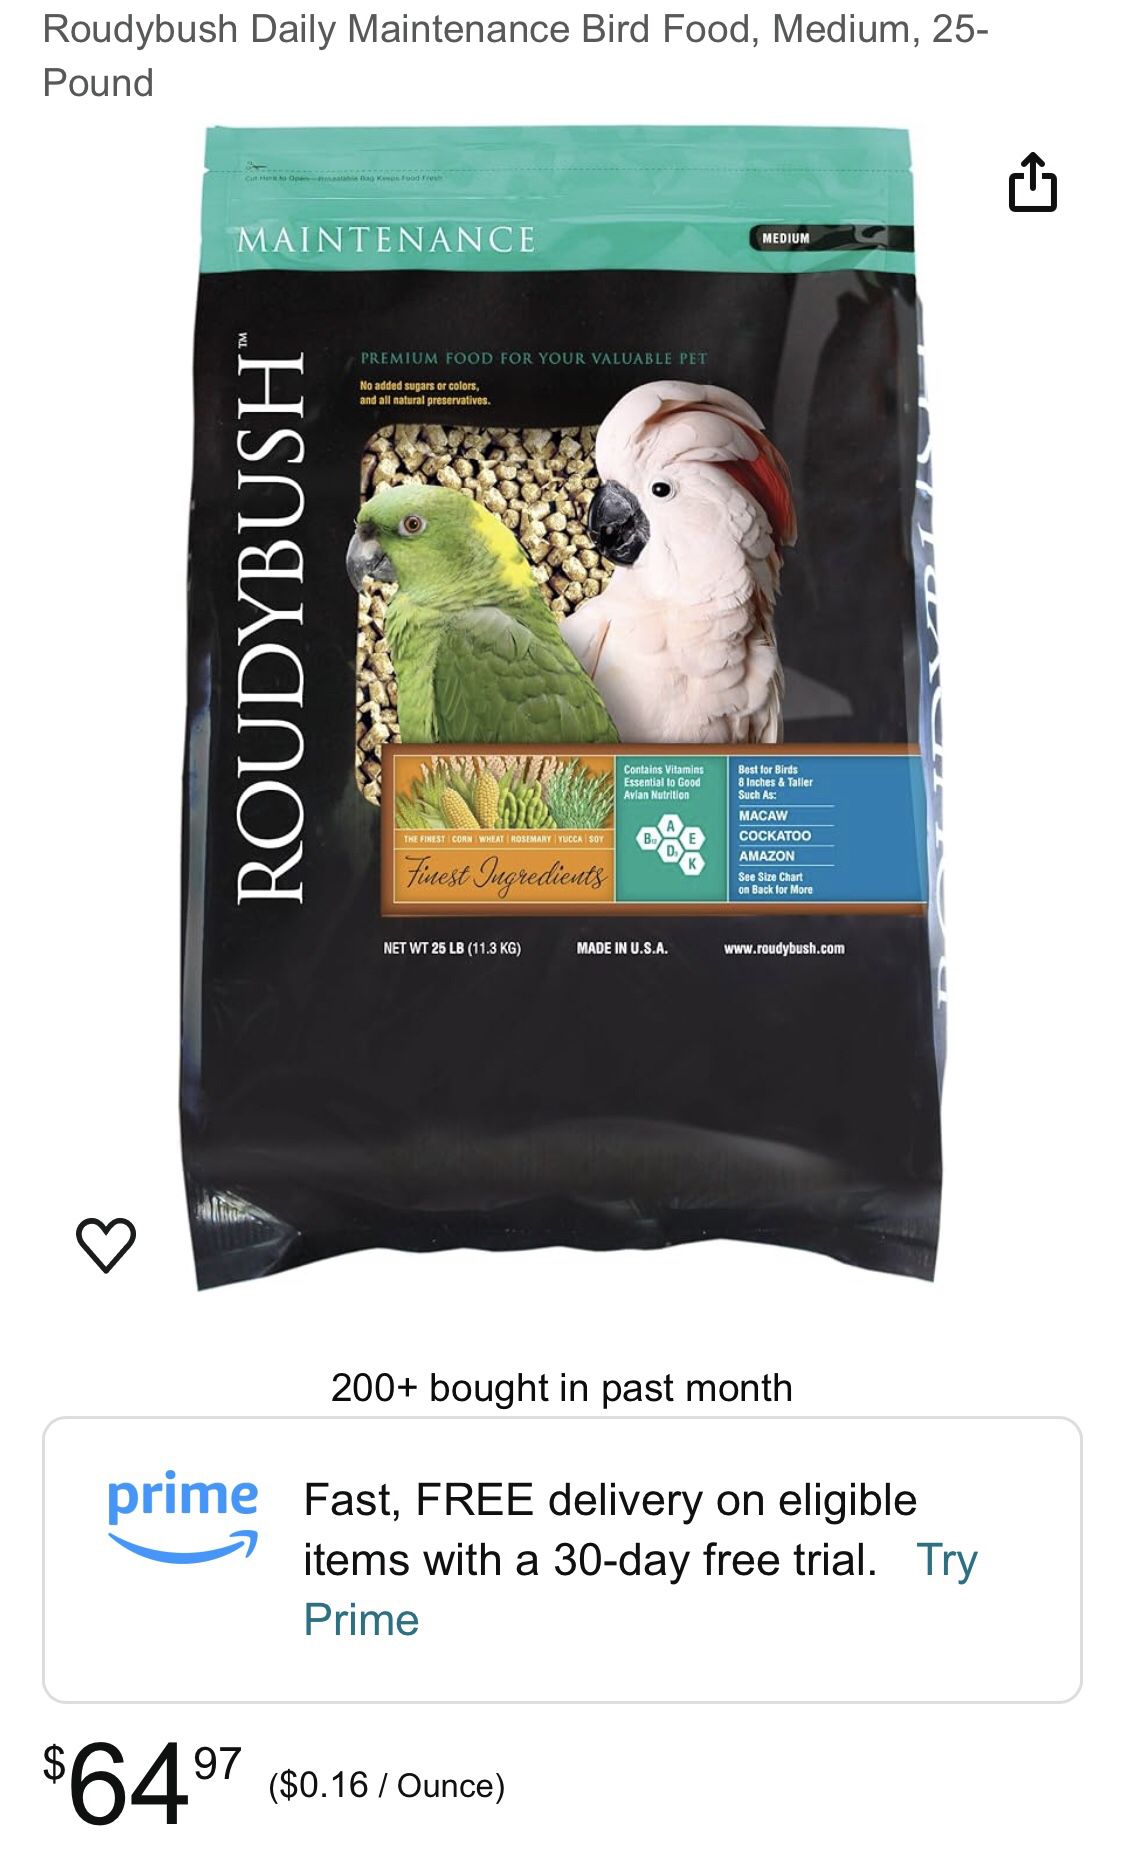 Roudybush Daily Maintenance Bird Food, Medium, 25-Pound